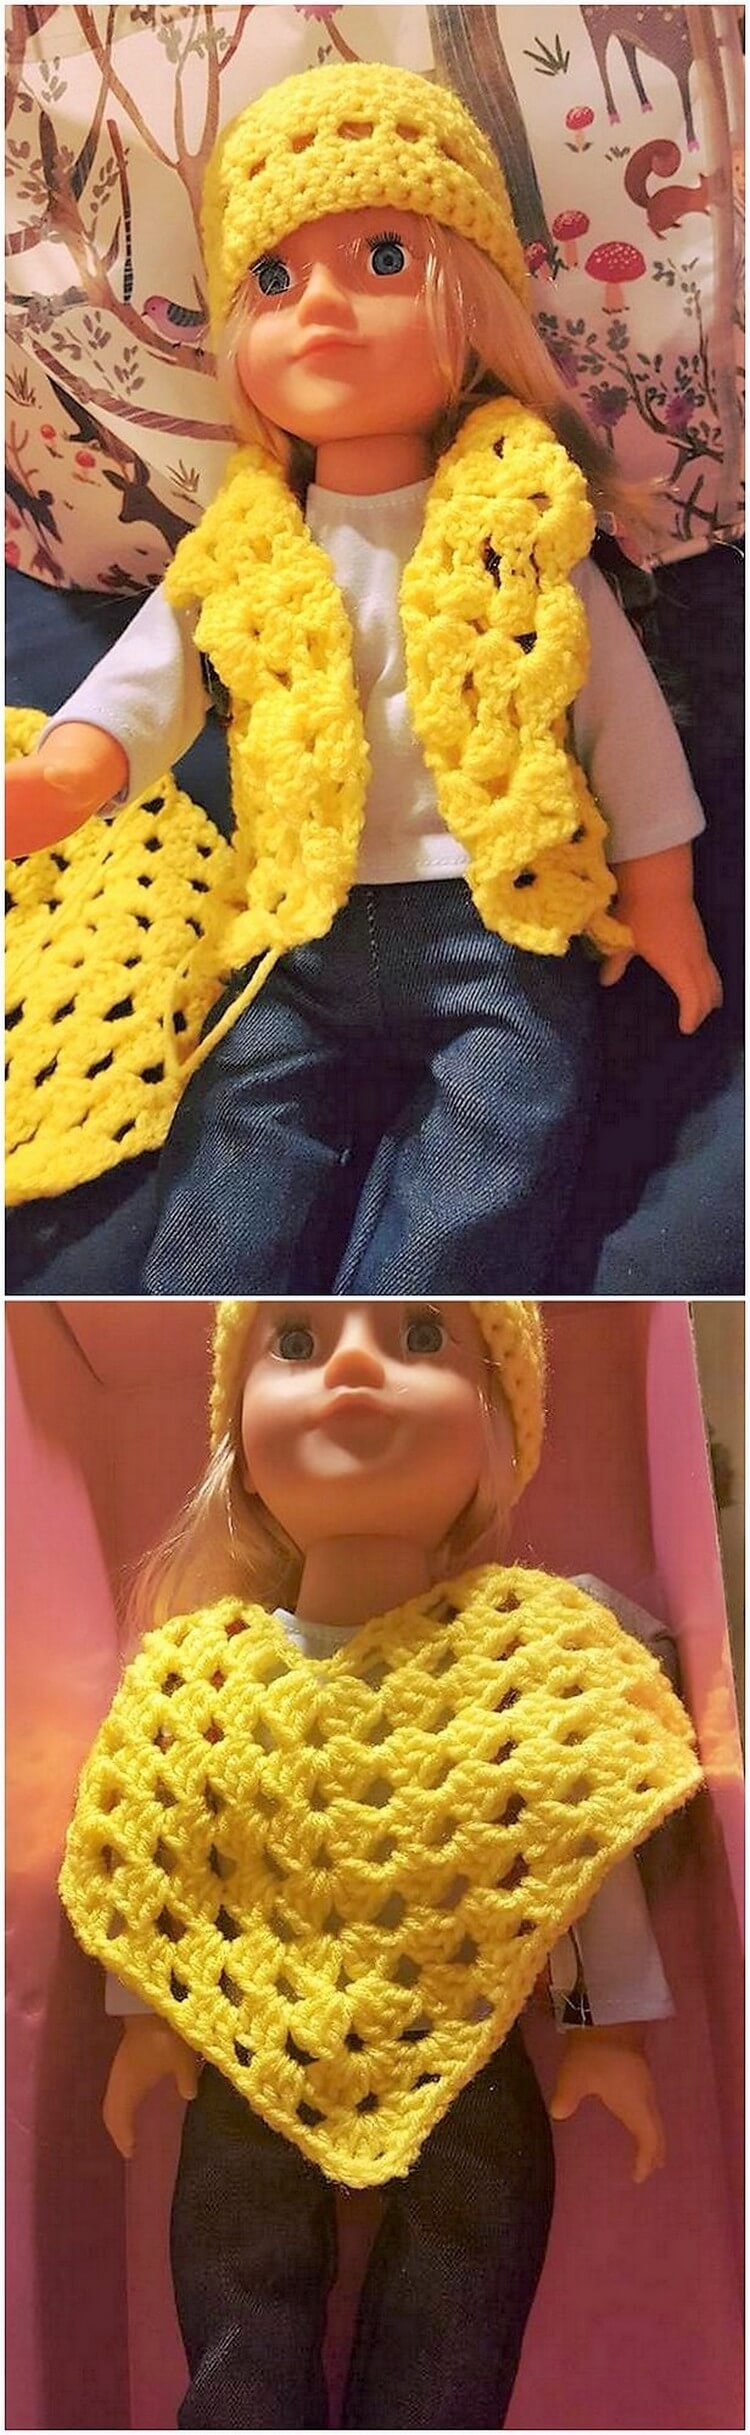 Crochet Creation for Doll